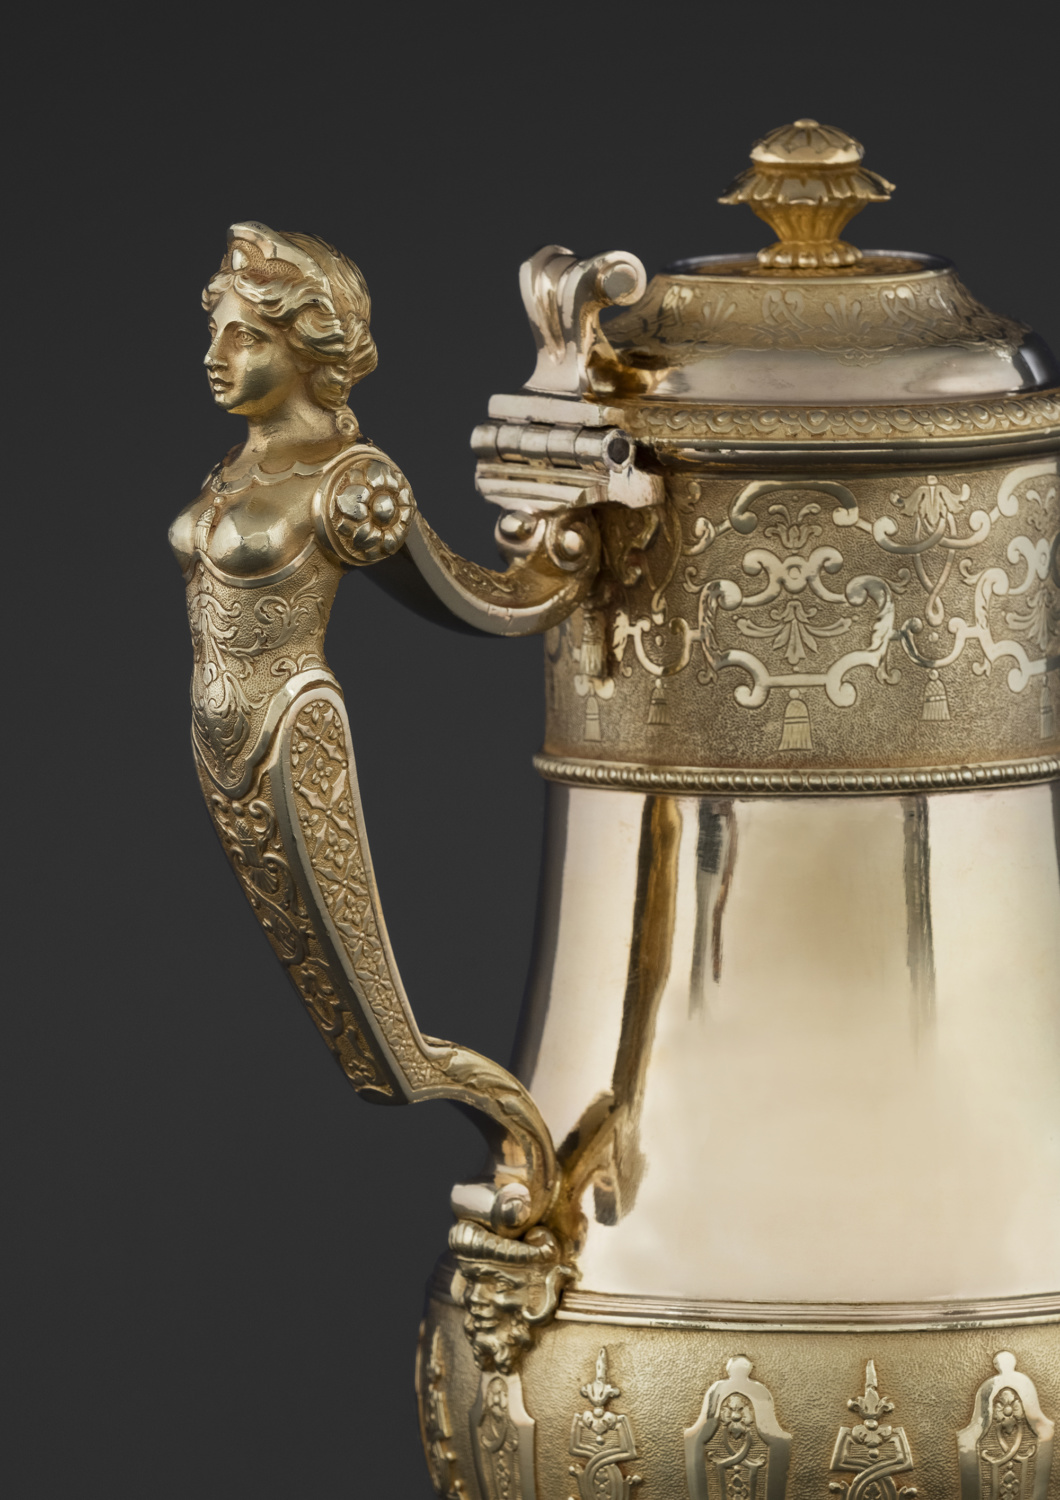 A silver gilt lidded ewer and basin - Galerie Kugel